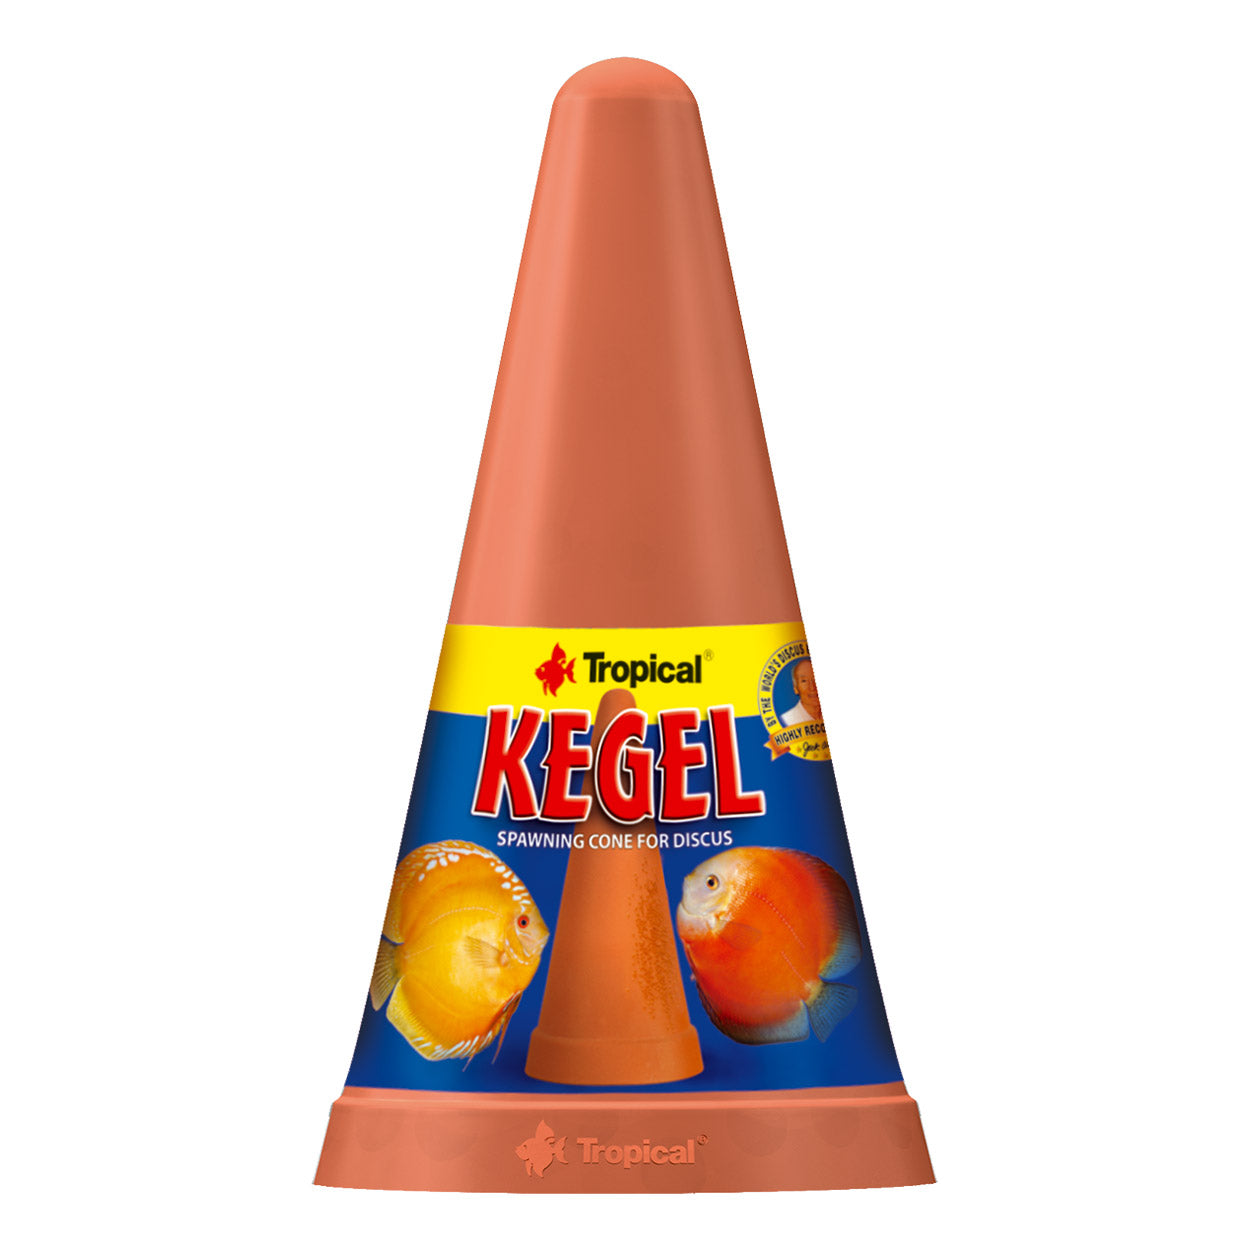 Tropical Kegel Spawning Cone